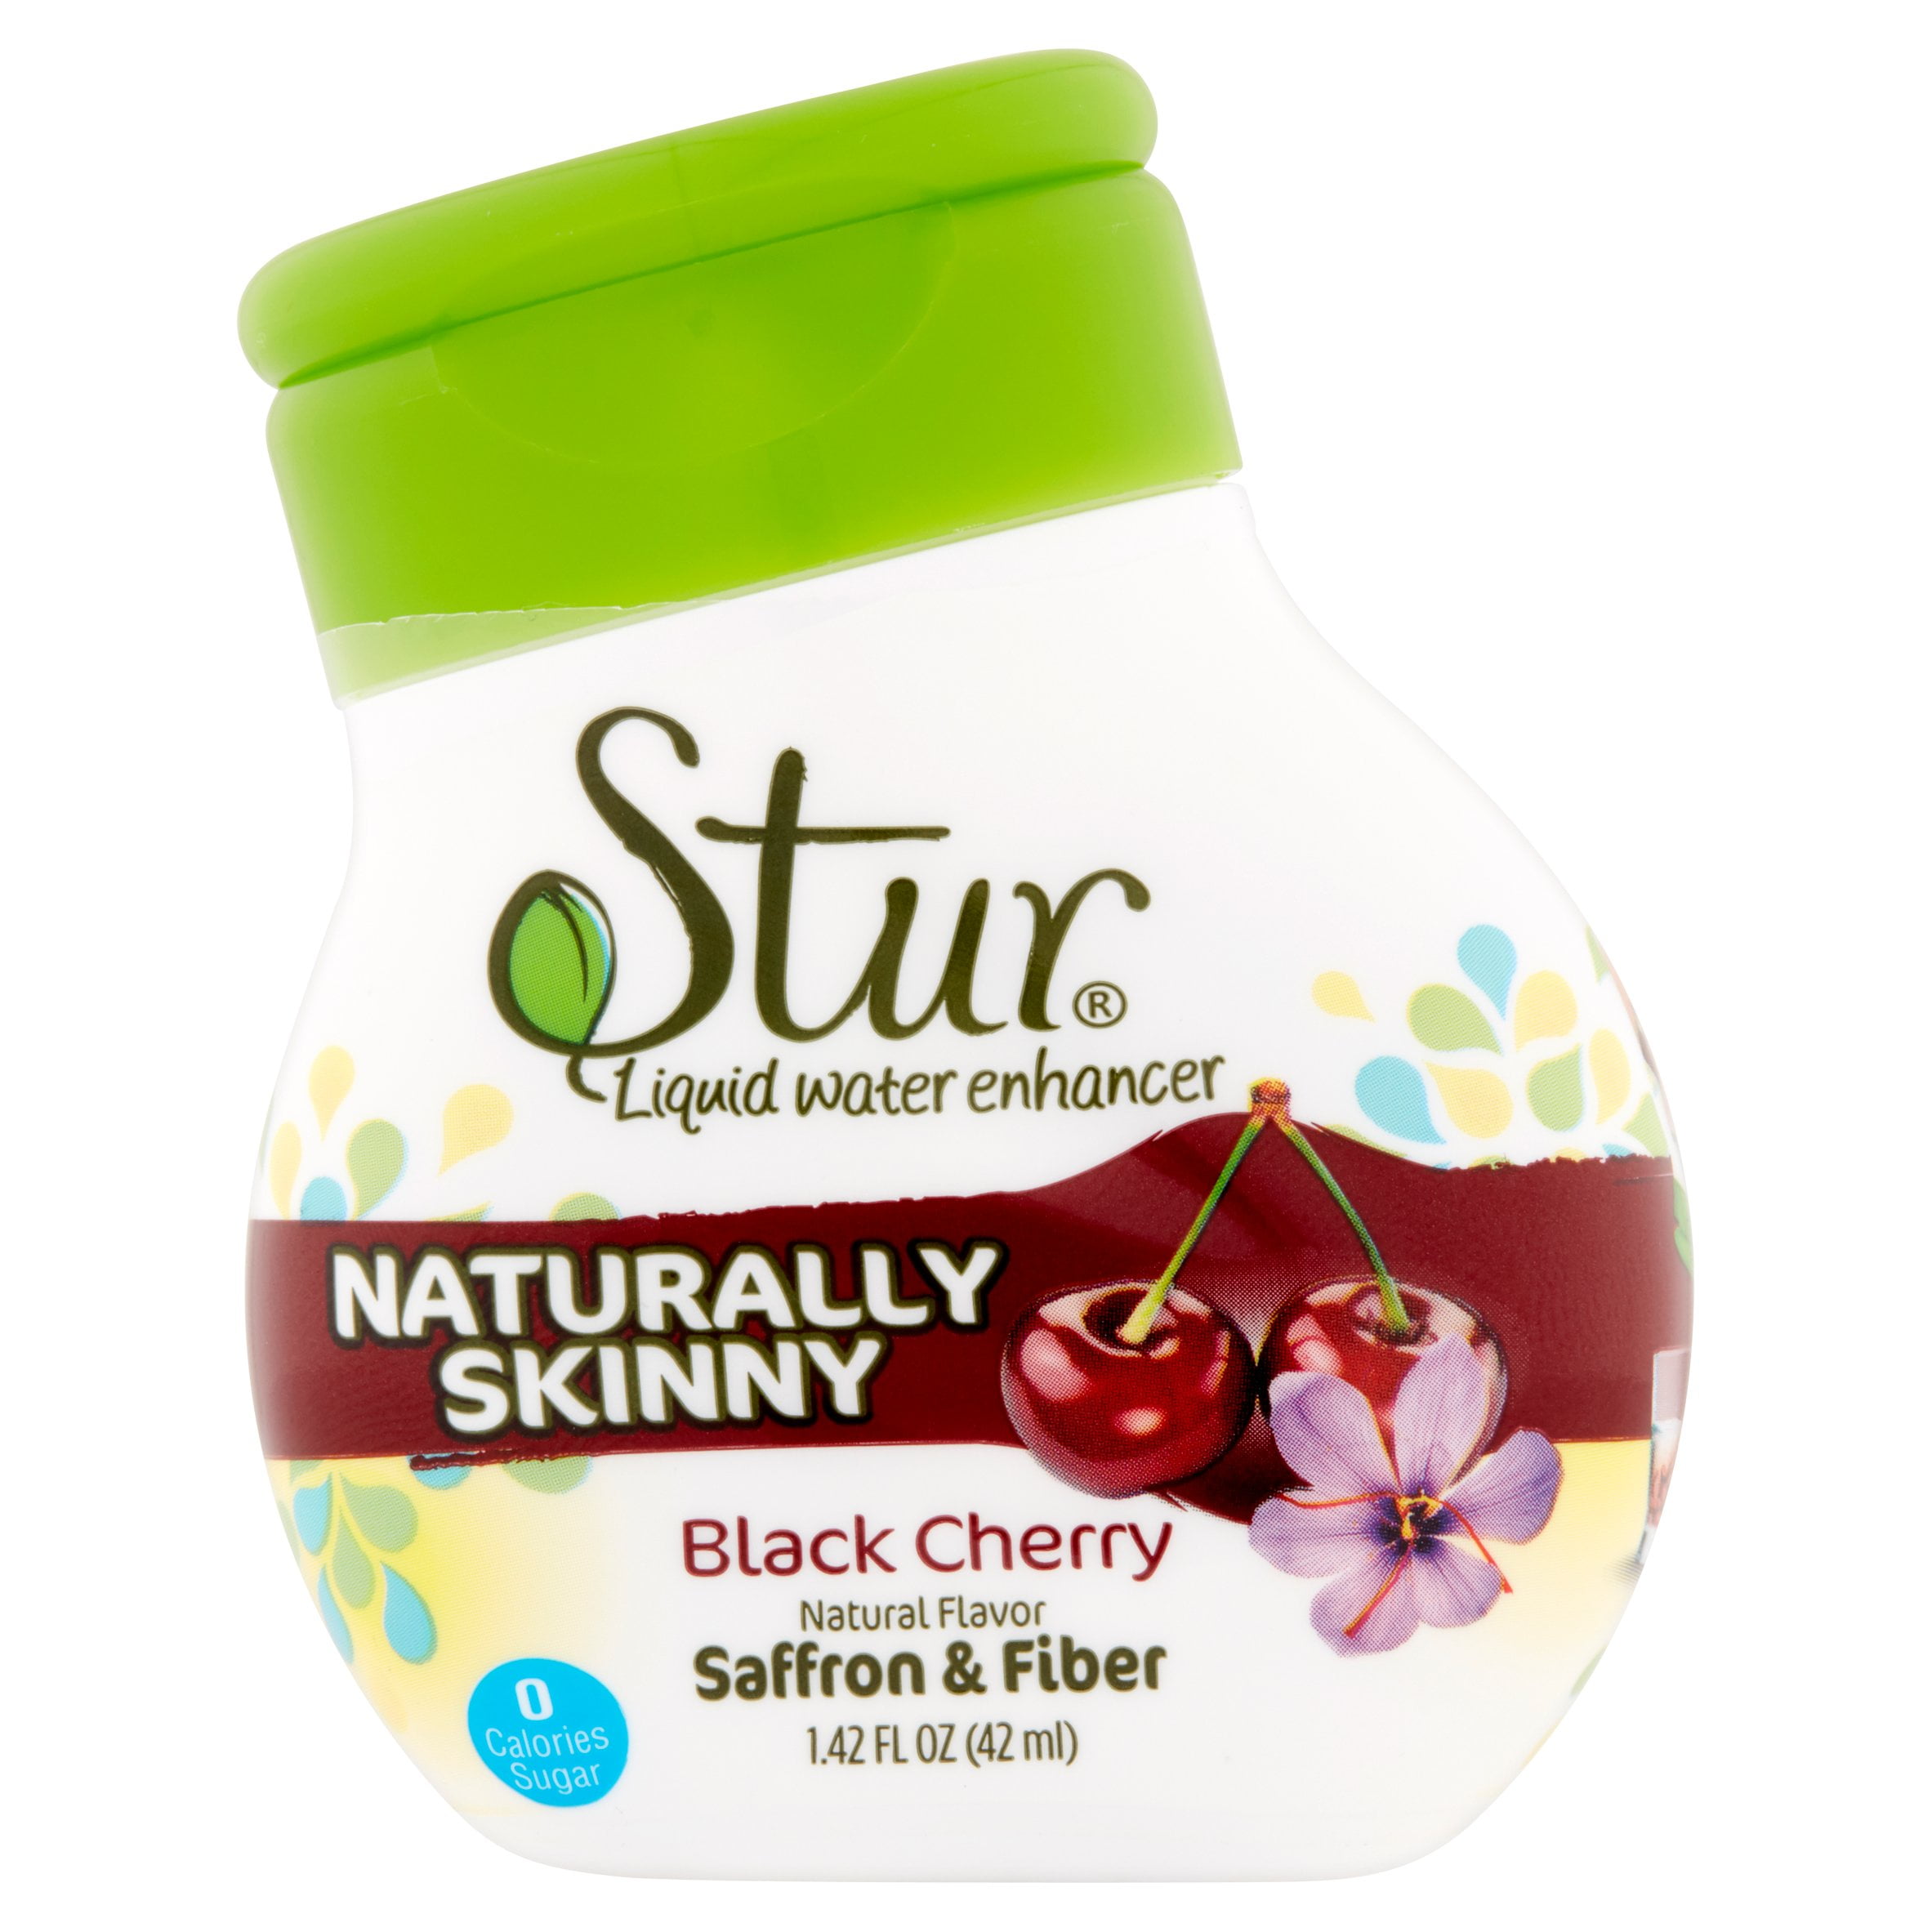 Stur Naturally Skinny Black Cherry Liquid Water Enhancer, 1.42 fl oz, 6 Pack